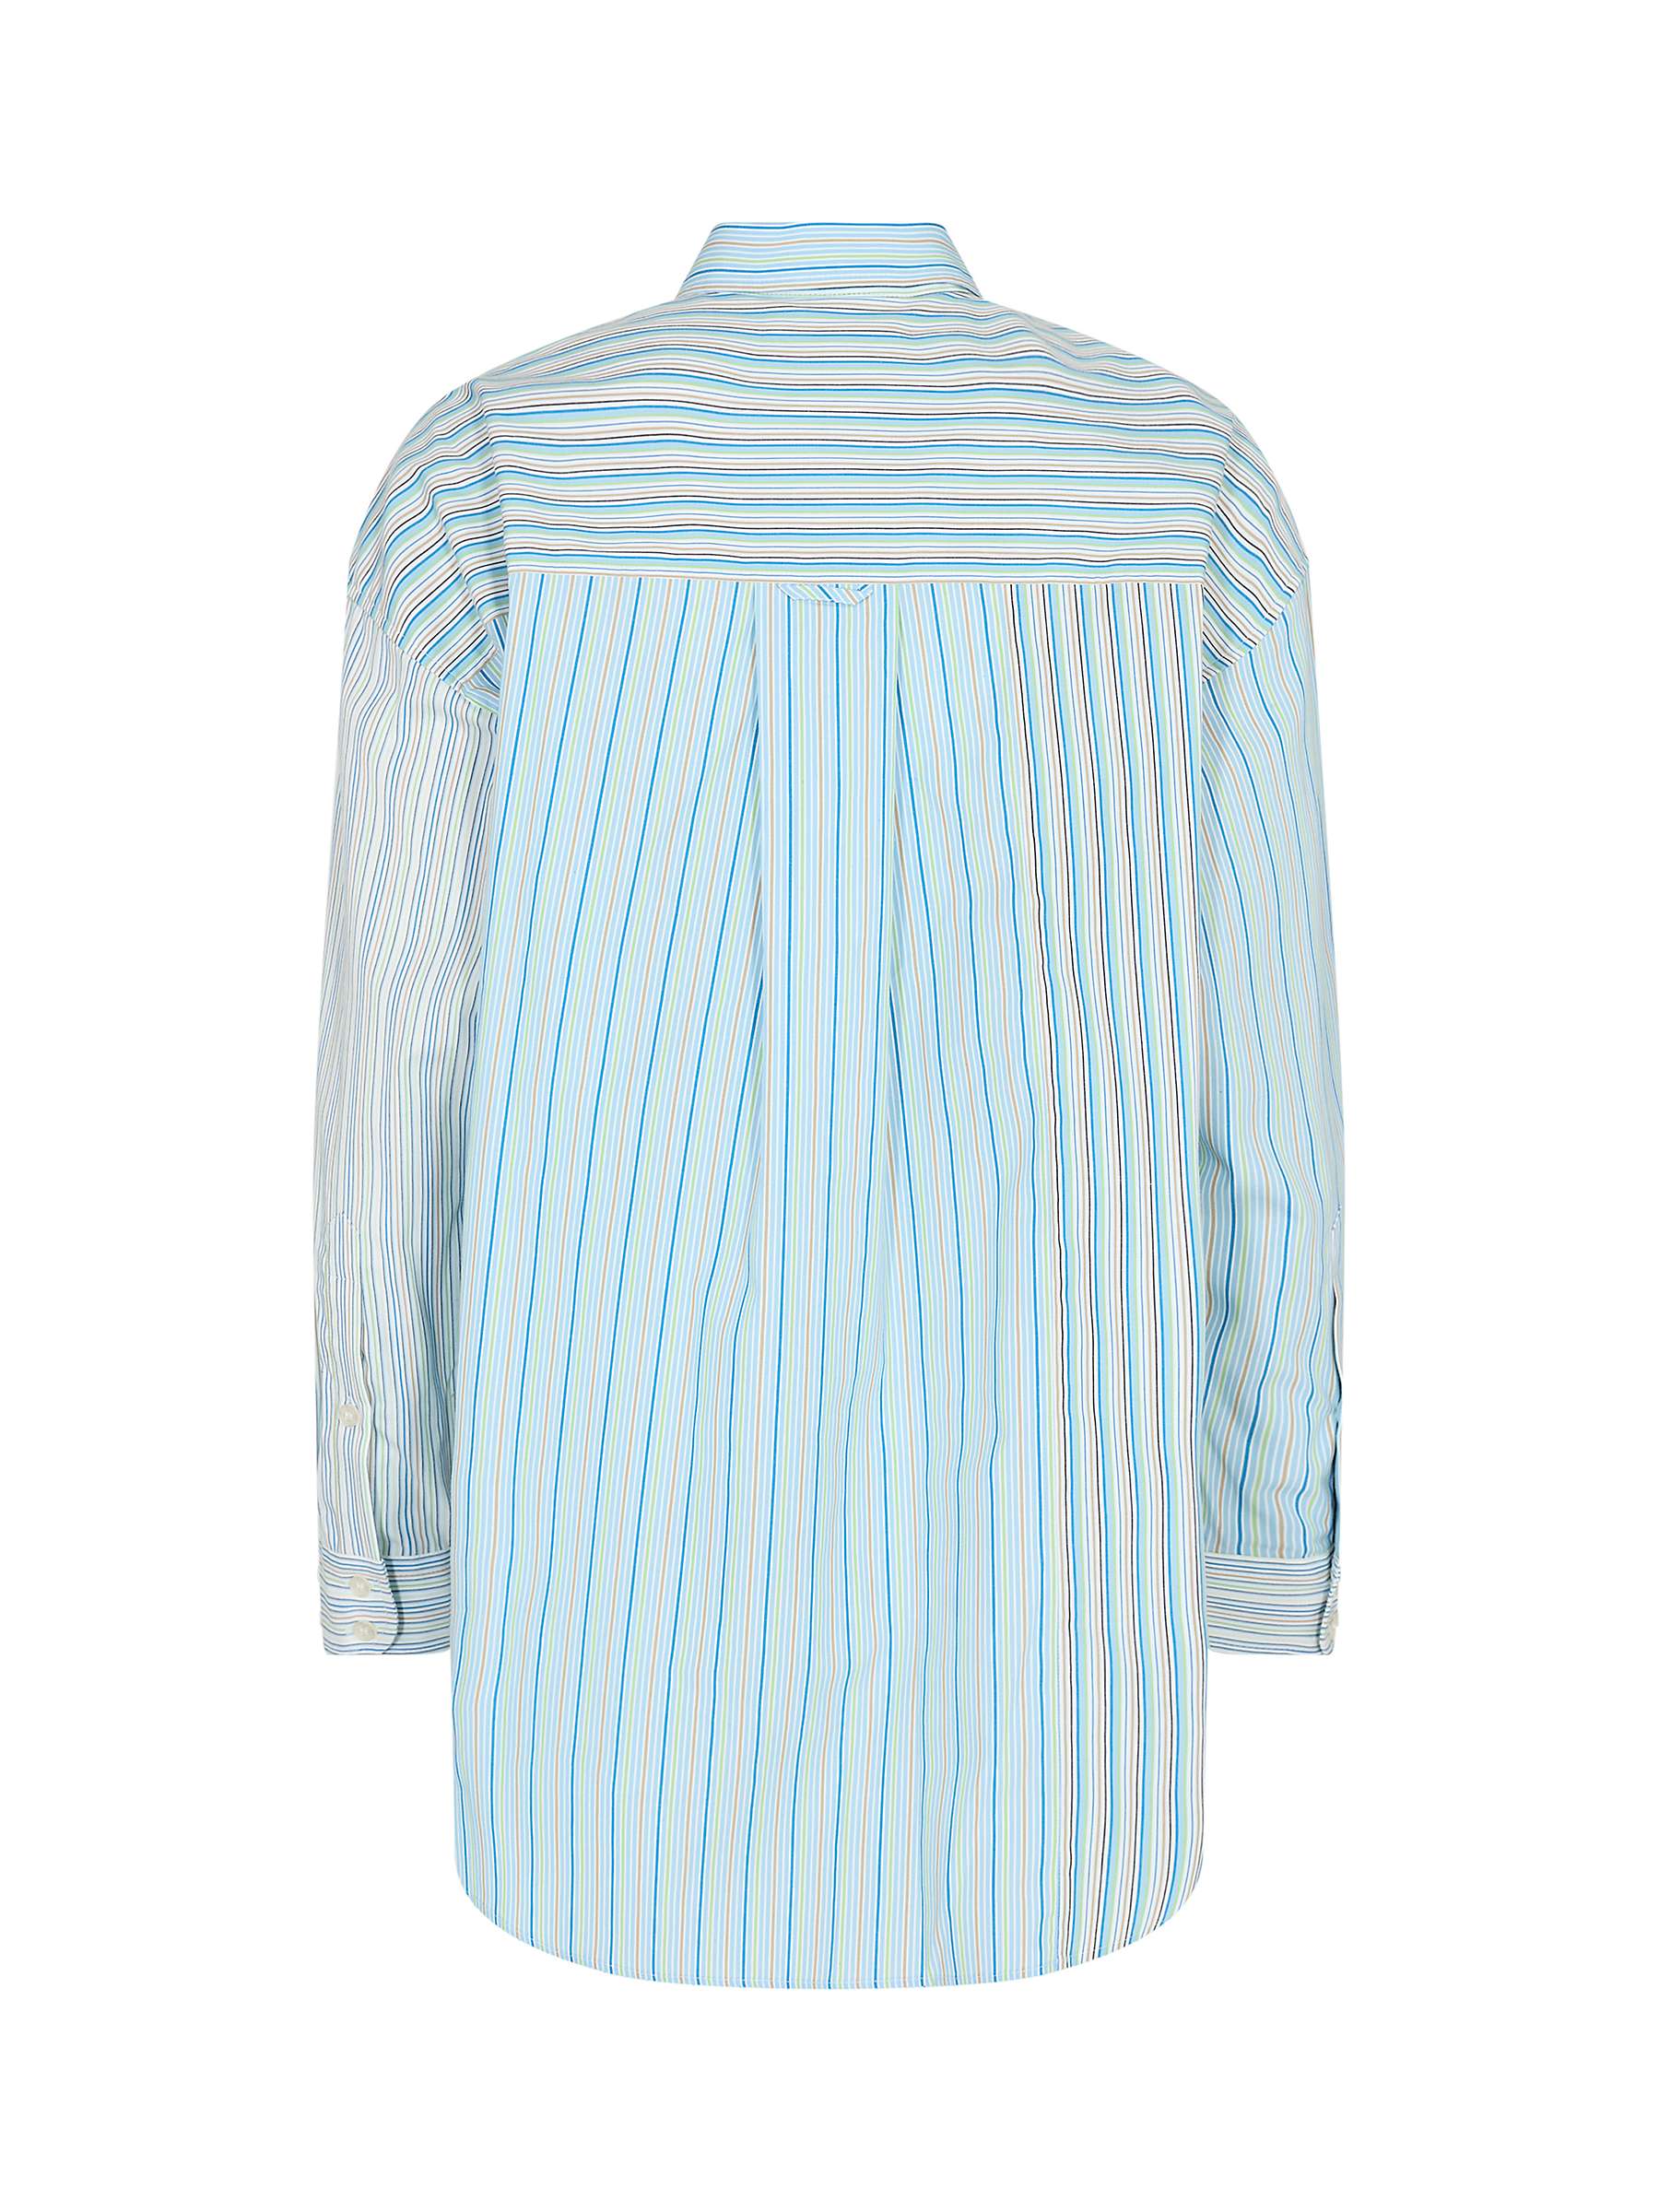 MOS MOSH Elke Multi Striped Shirt, Clear Sky at John Lewis & Partners